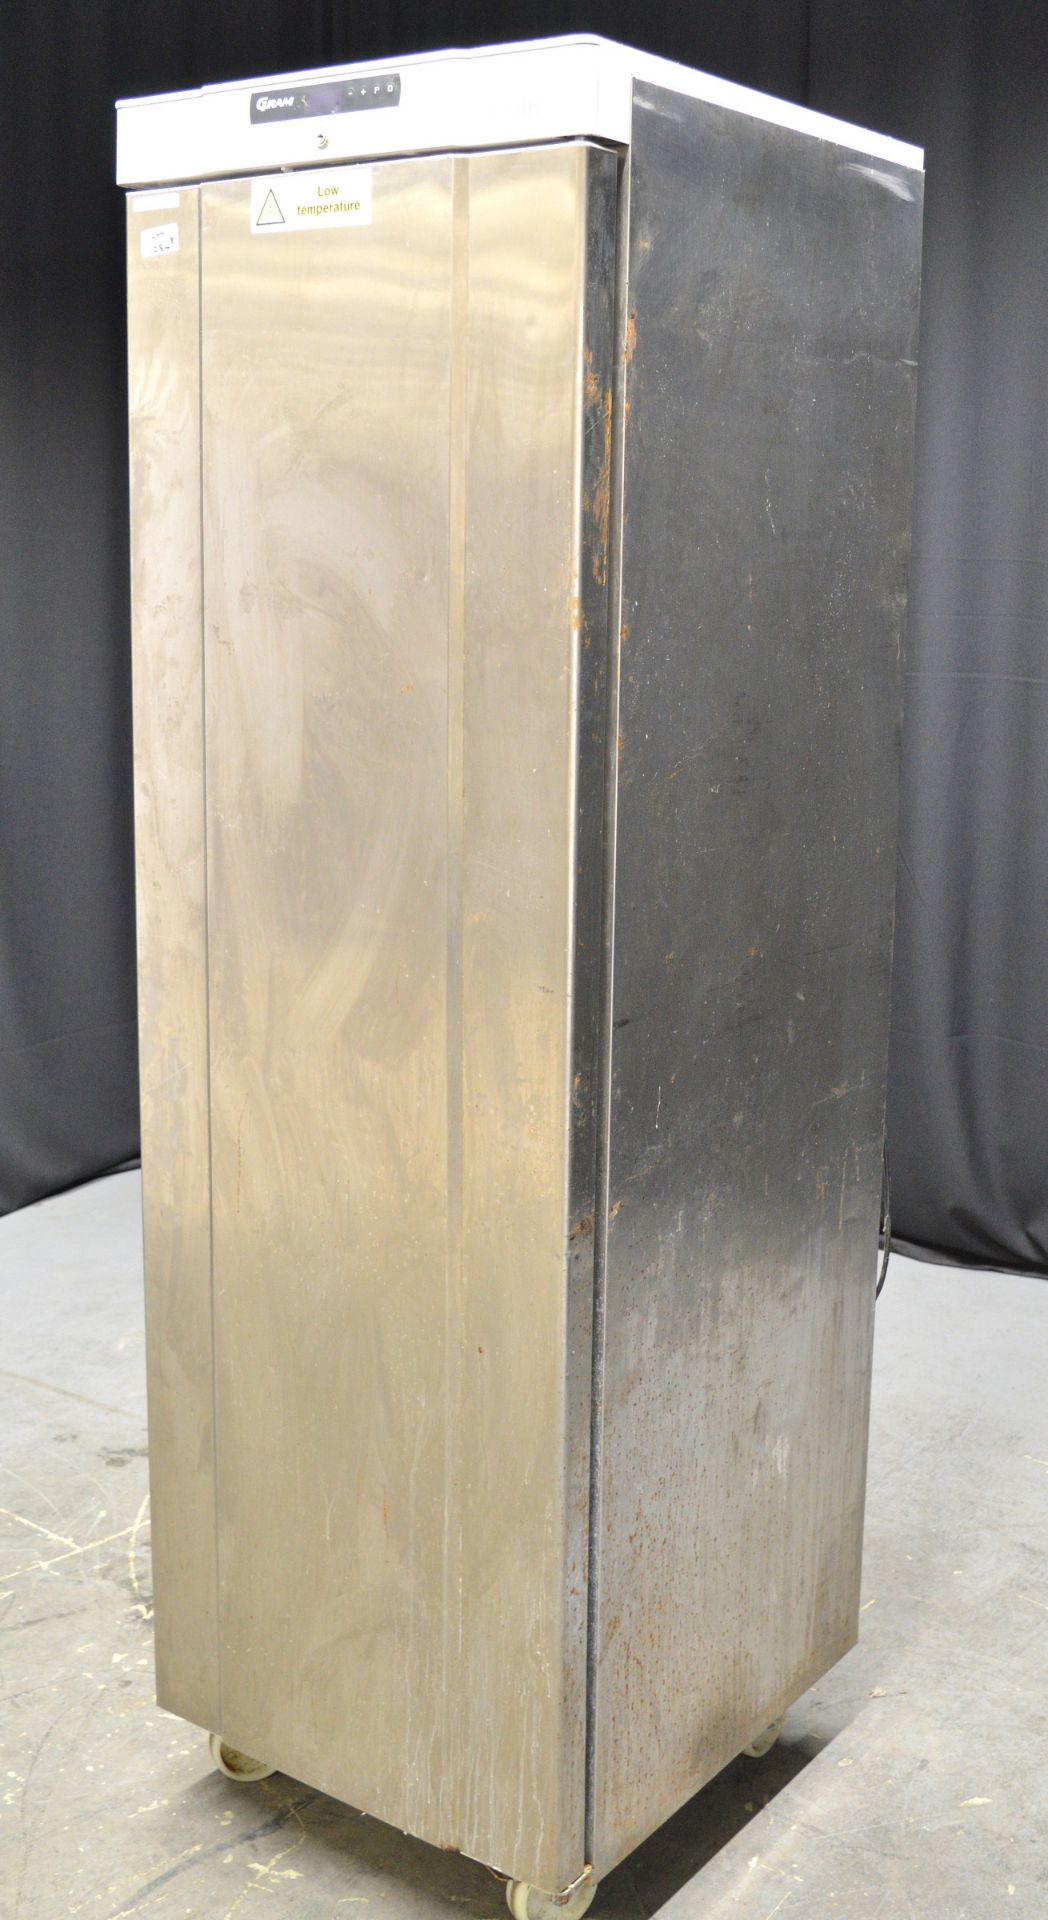 Gram F410 RG C 6N Stainless Steel Upright Freezer - Image 3 of 9